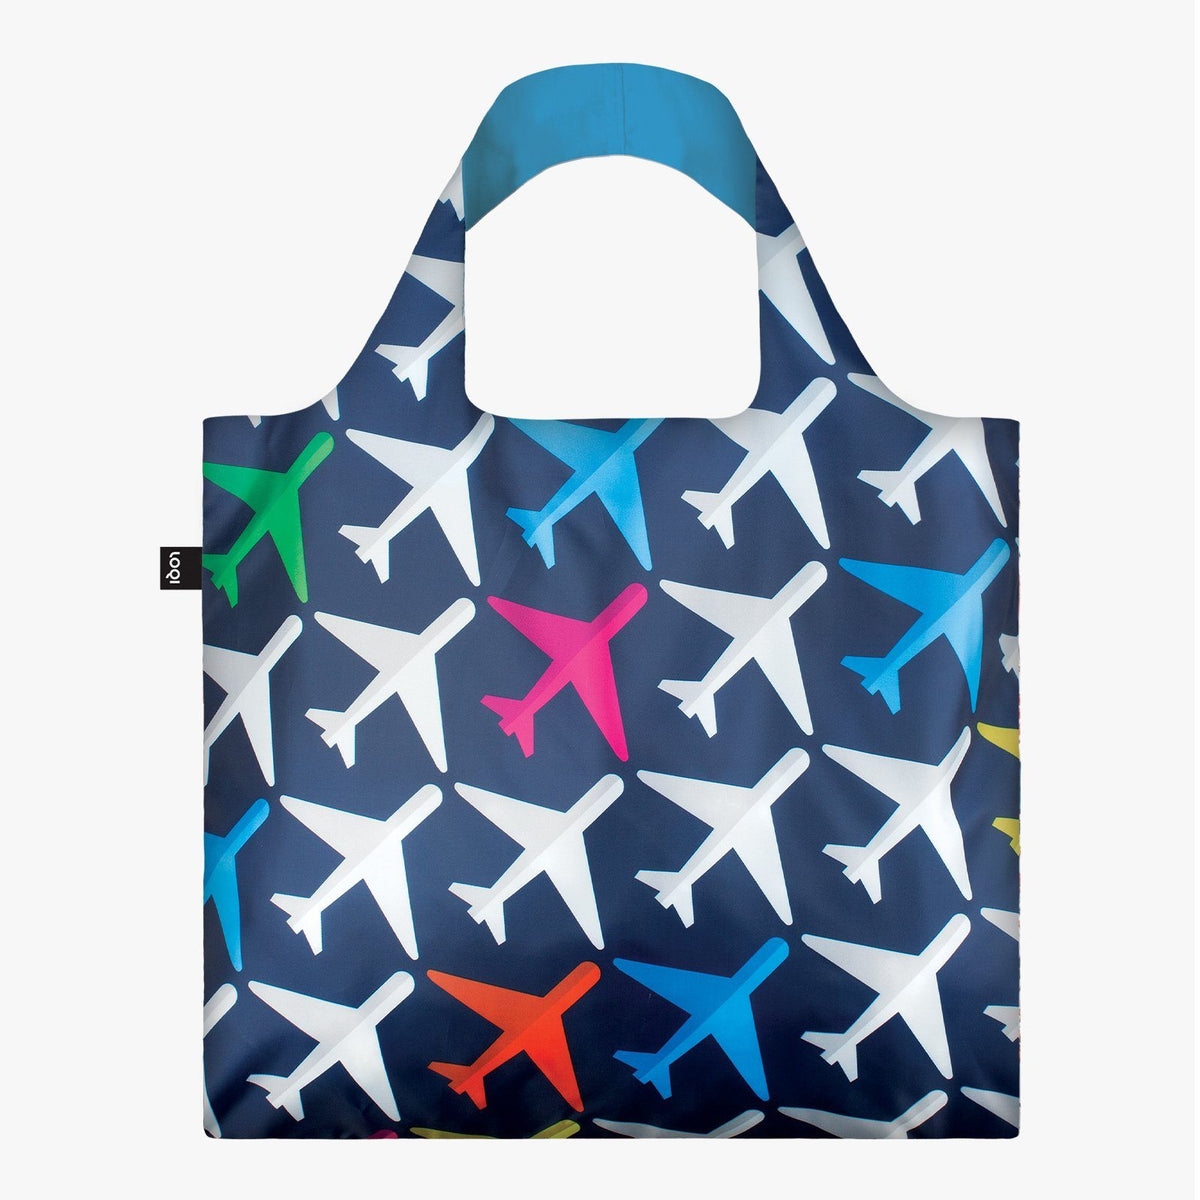 LOQI Airport Airplane Bag